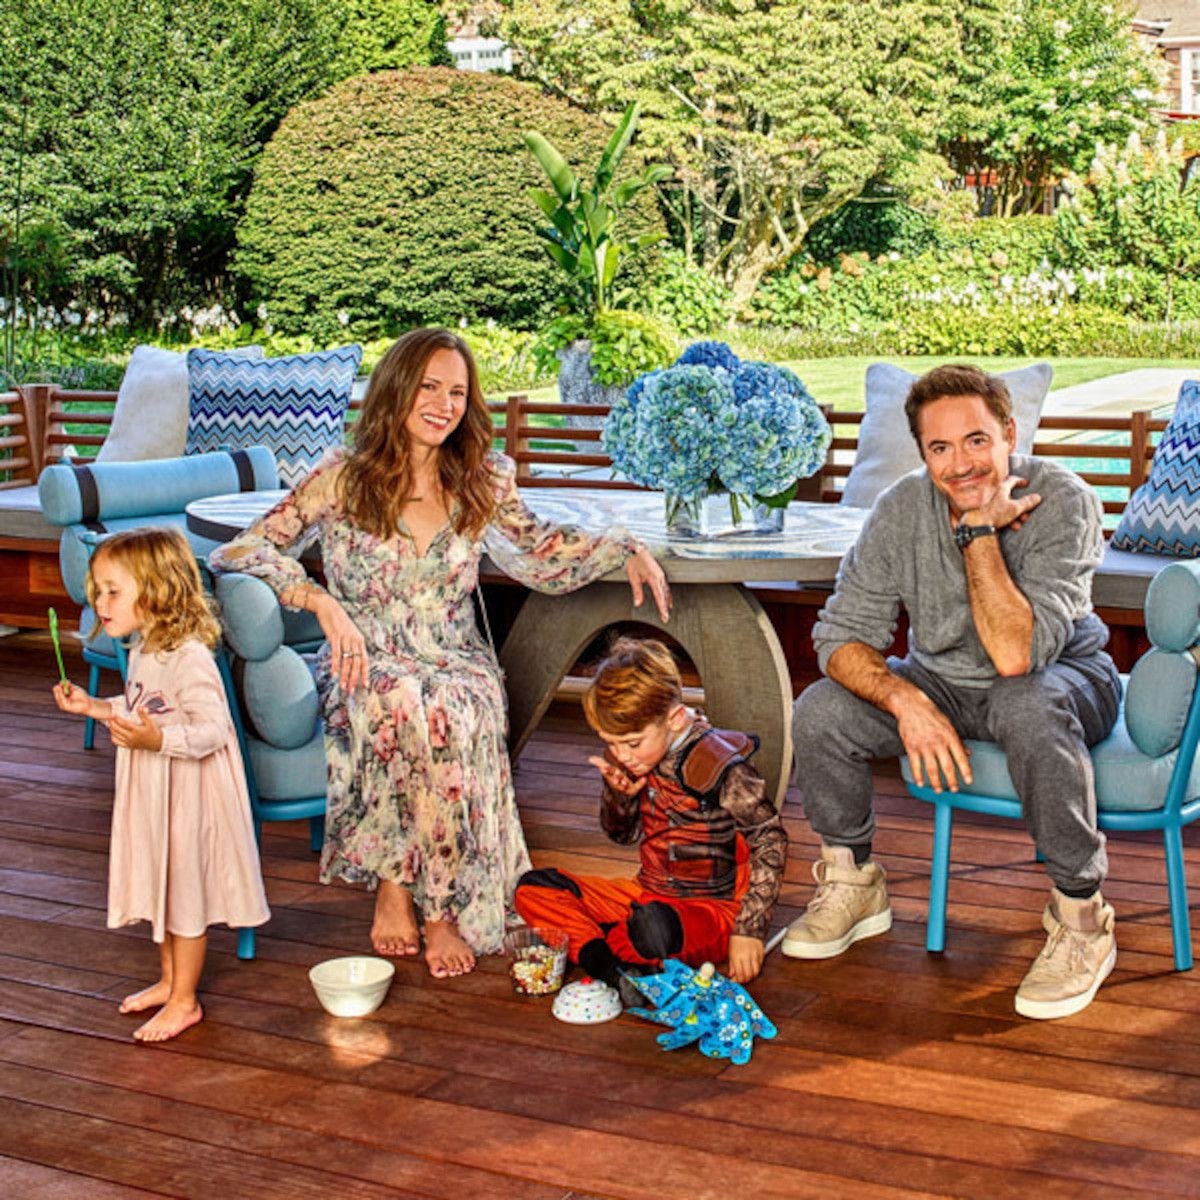 Robert Downey Jr & Susan Downey with their kids